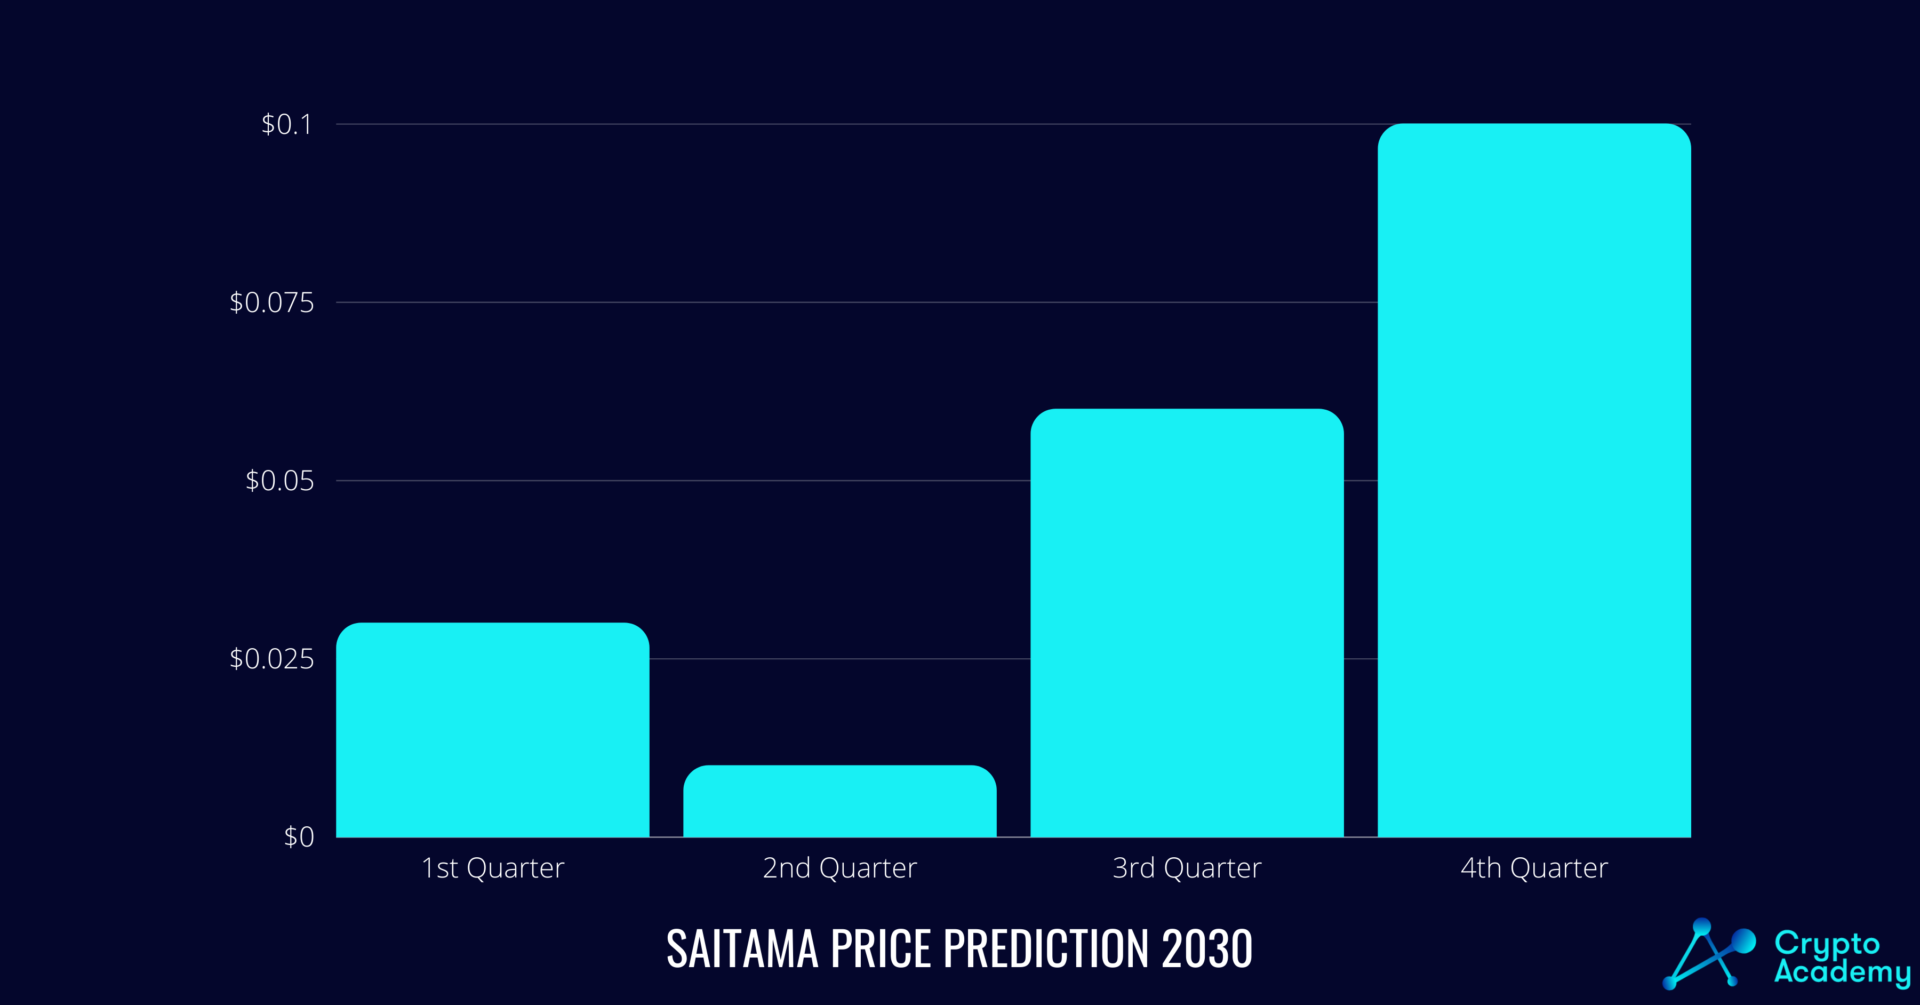 Saitama price prediction for 2030